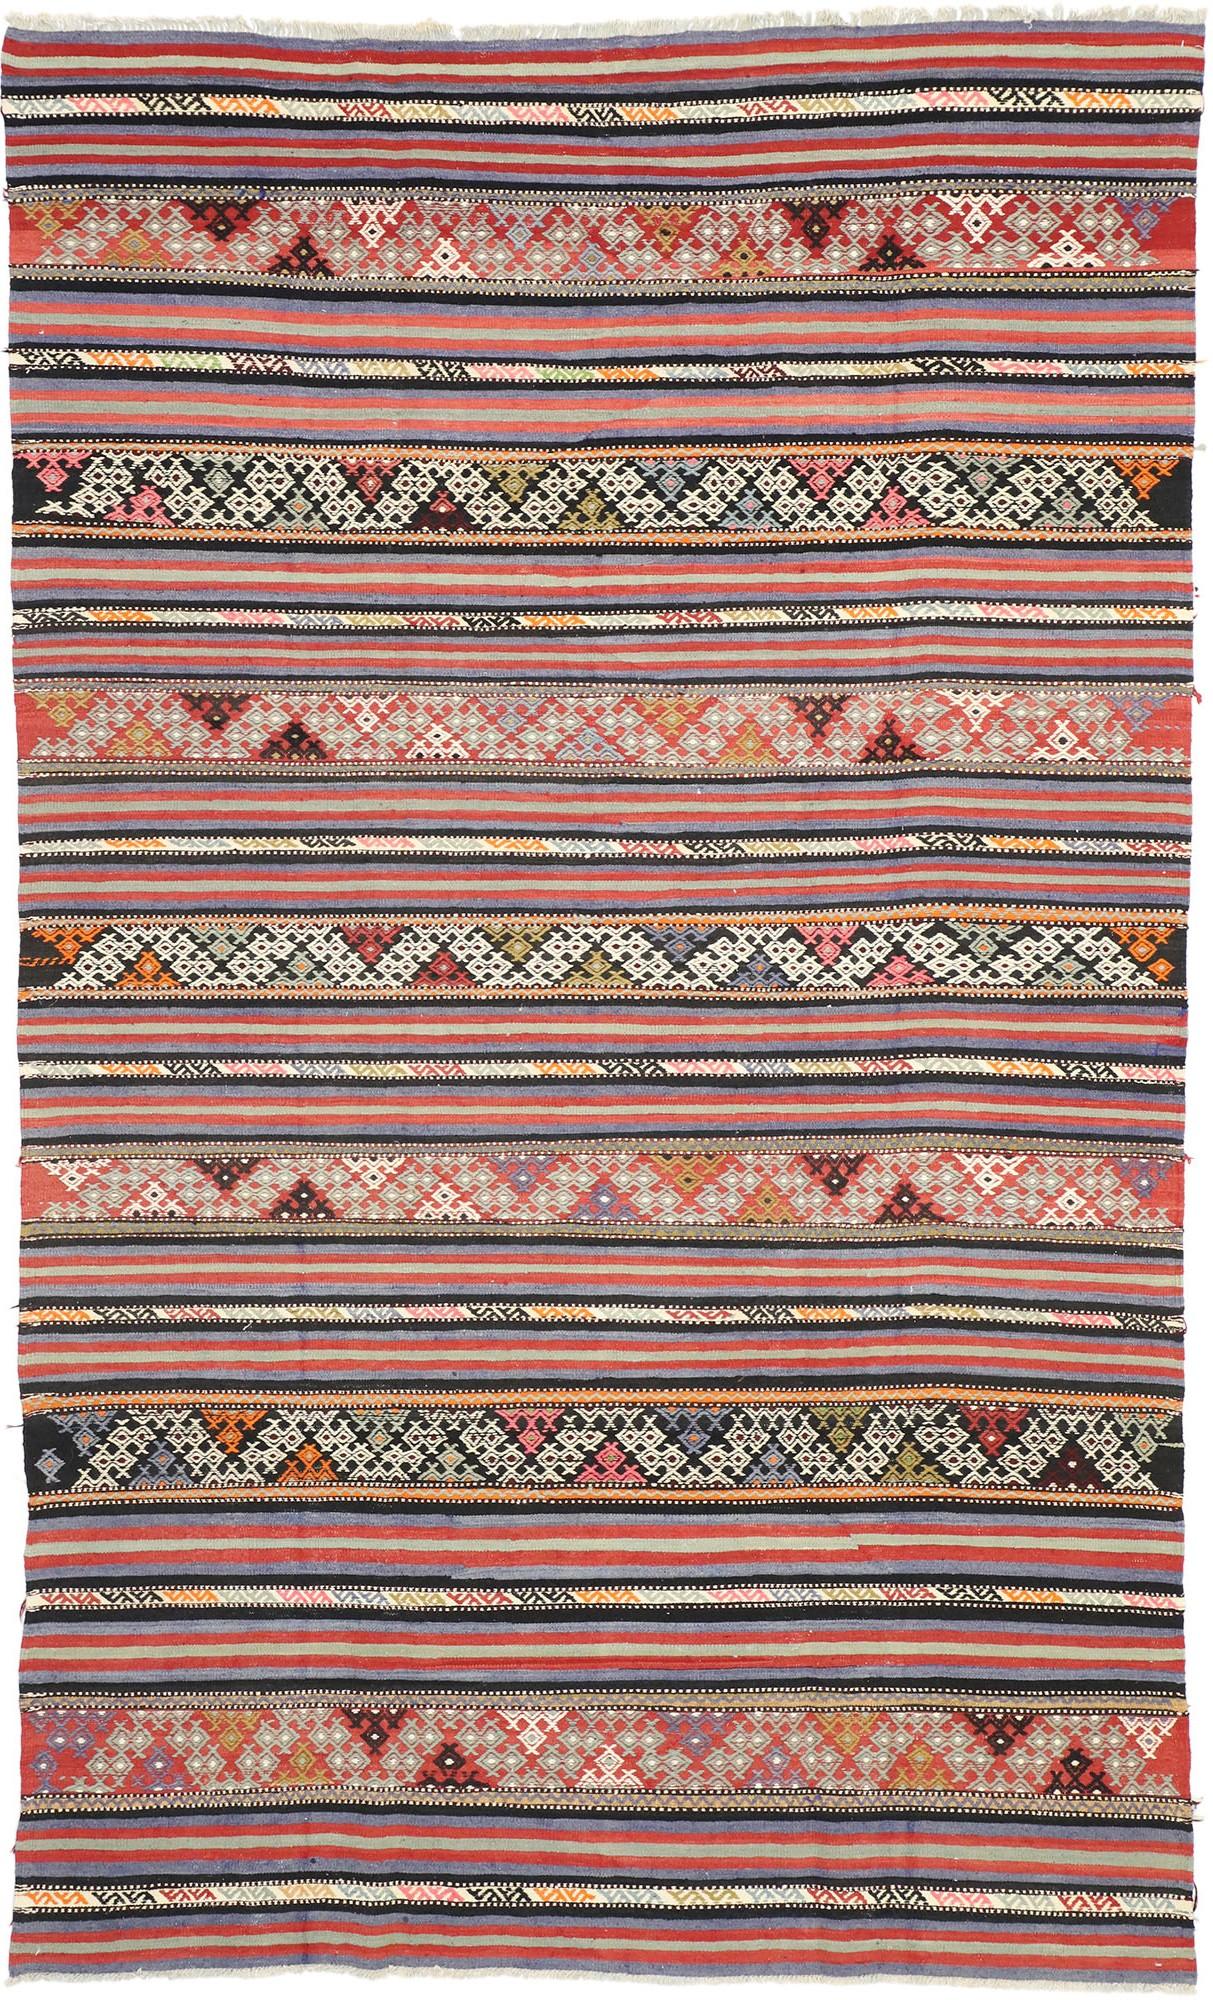 Vintage Turkish Striped Kilim Rug with Modern Boho Chic Tribal Style For Sale 2